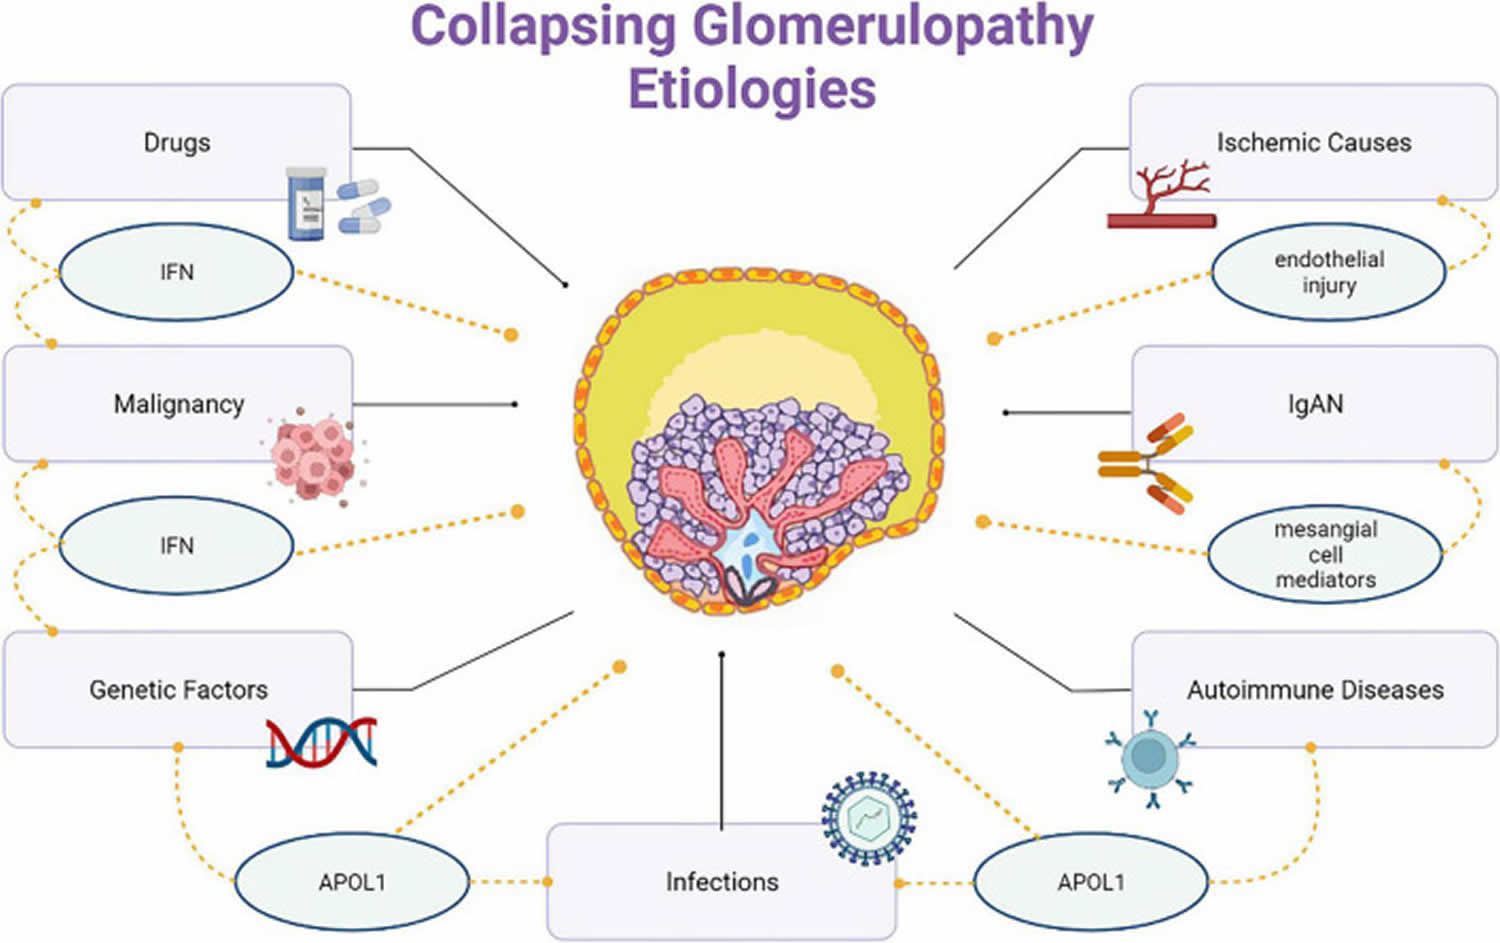 Collapsing glomerulopathy causes